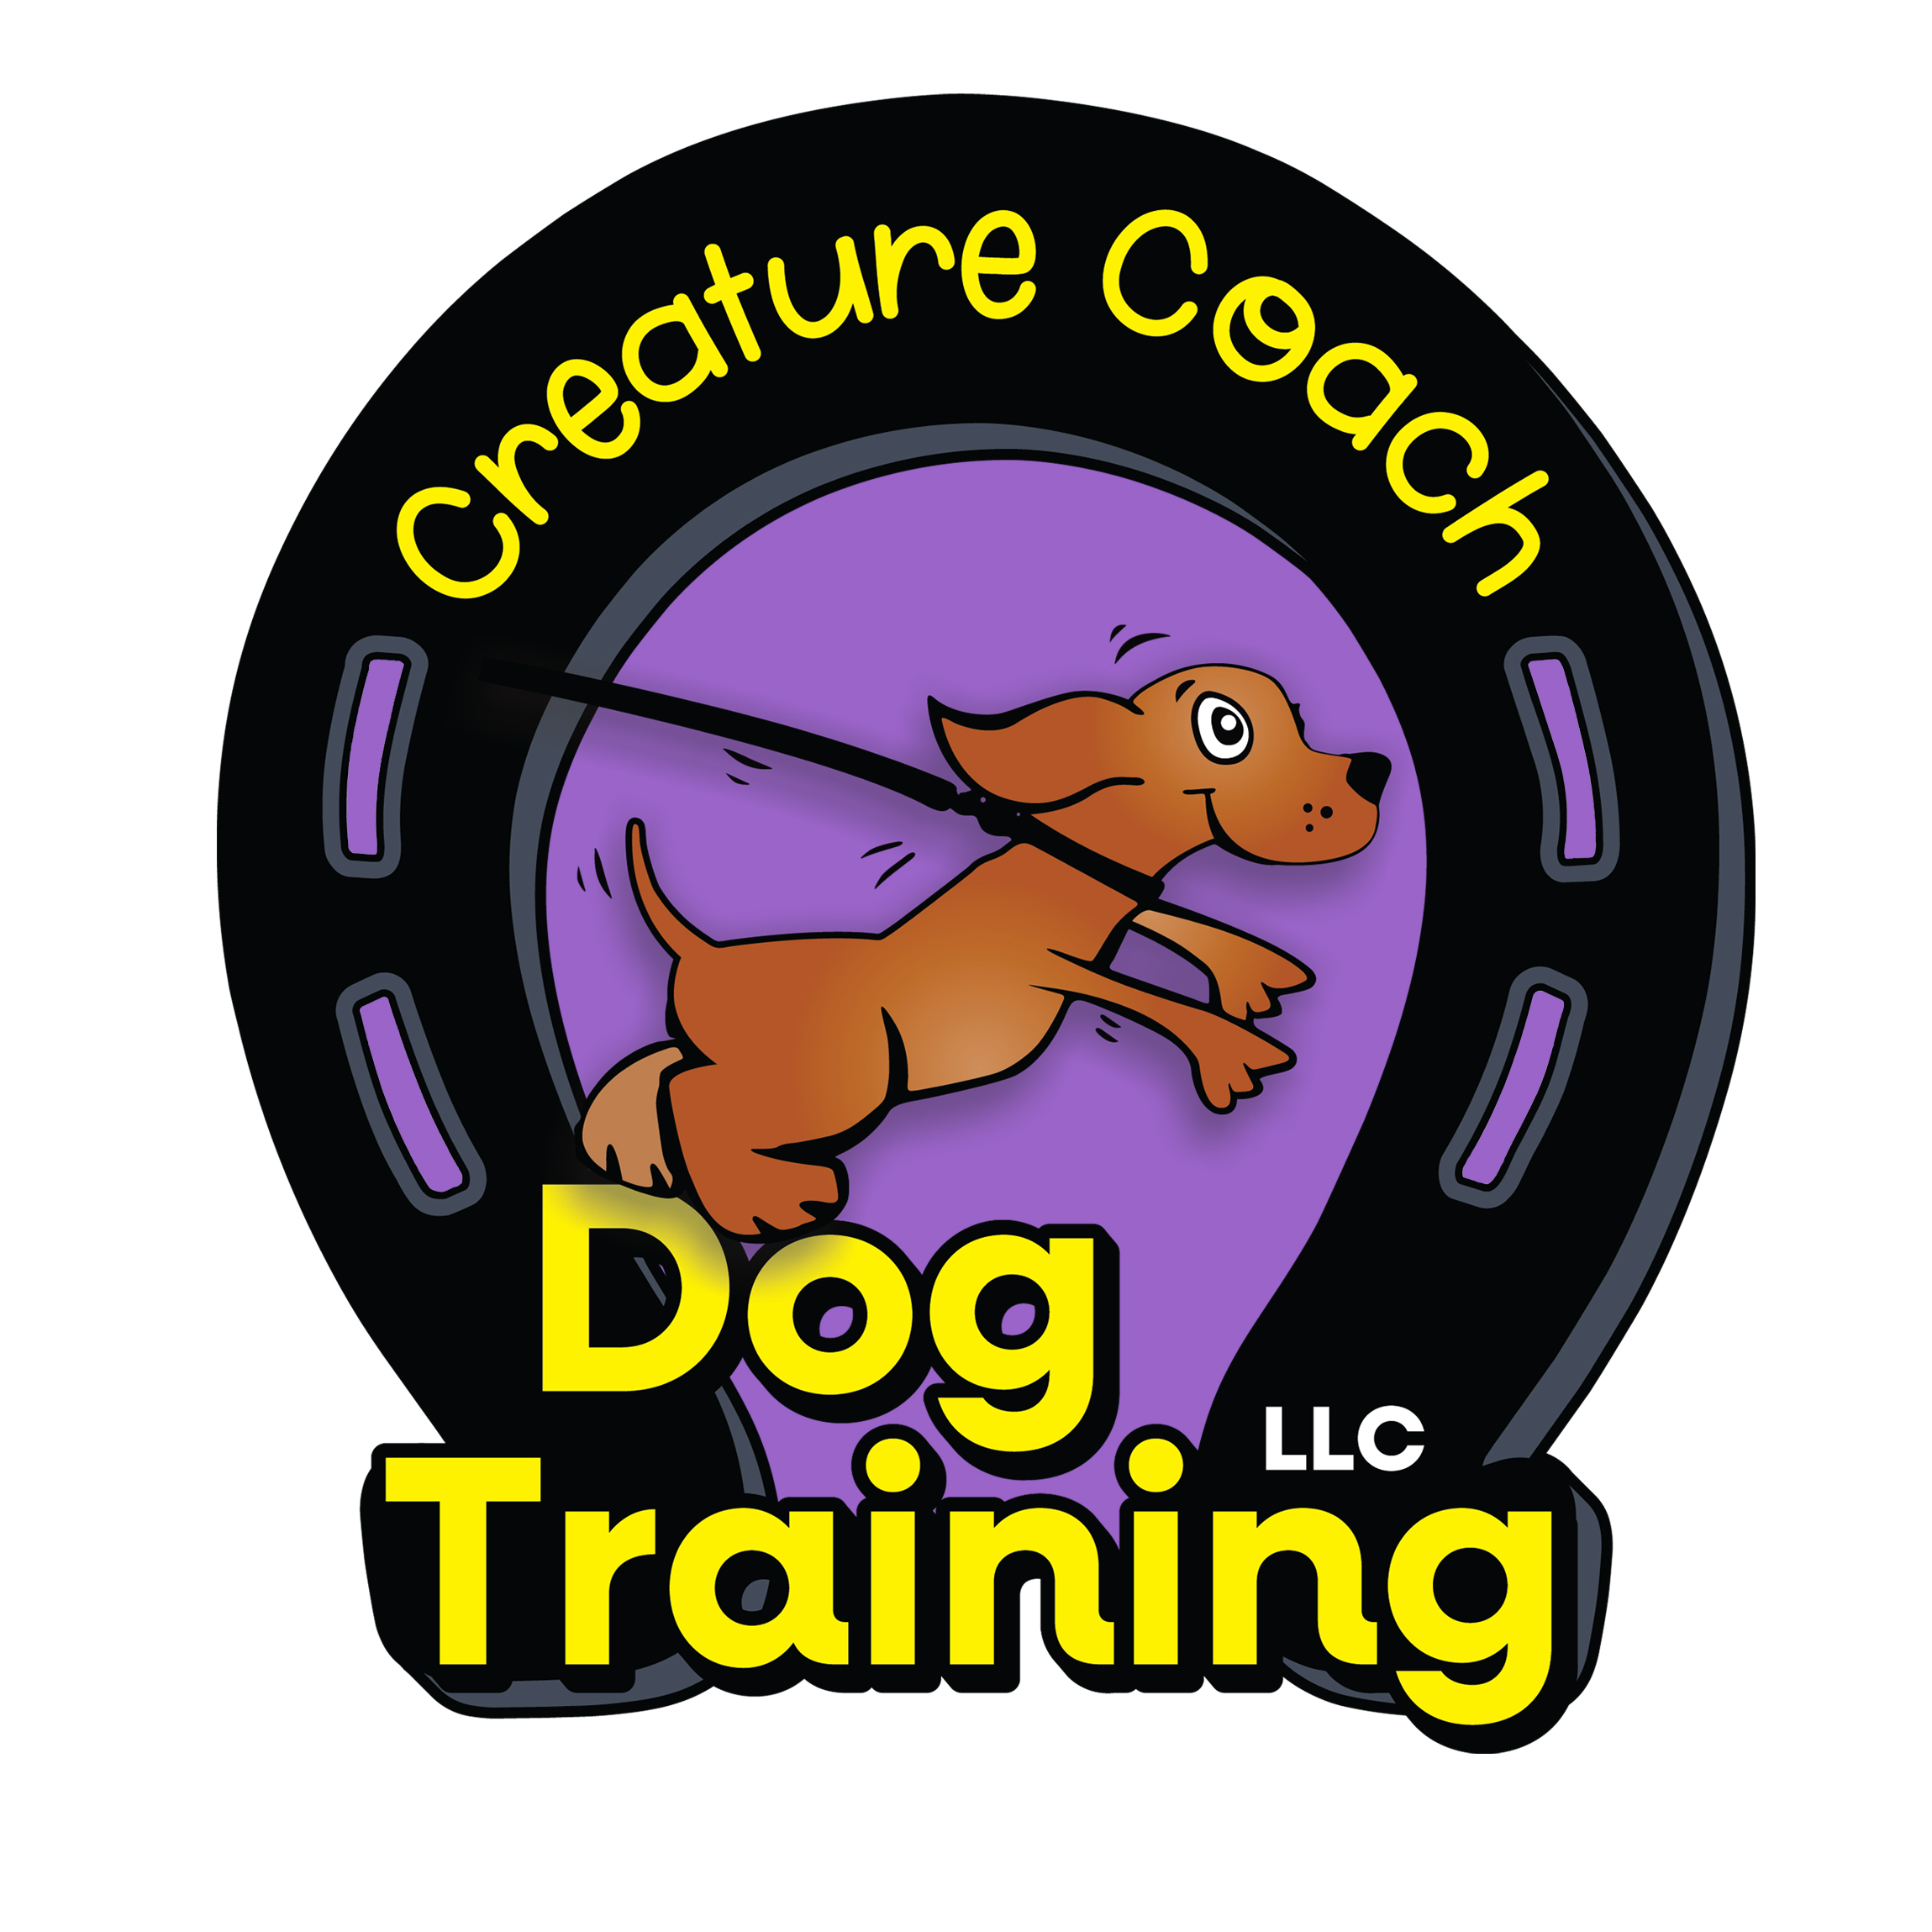 Creature Coach Dog Training, LLC logo